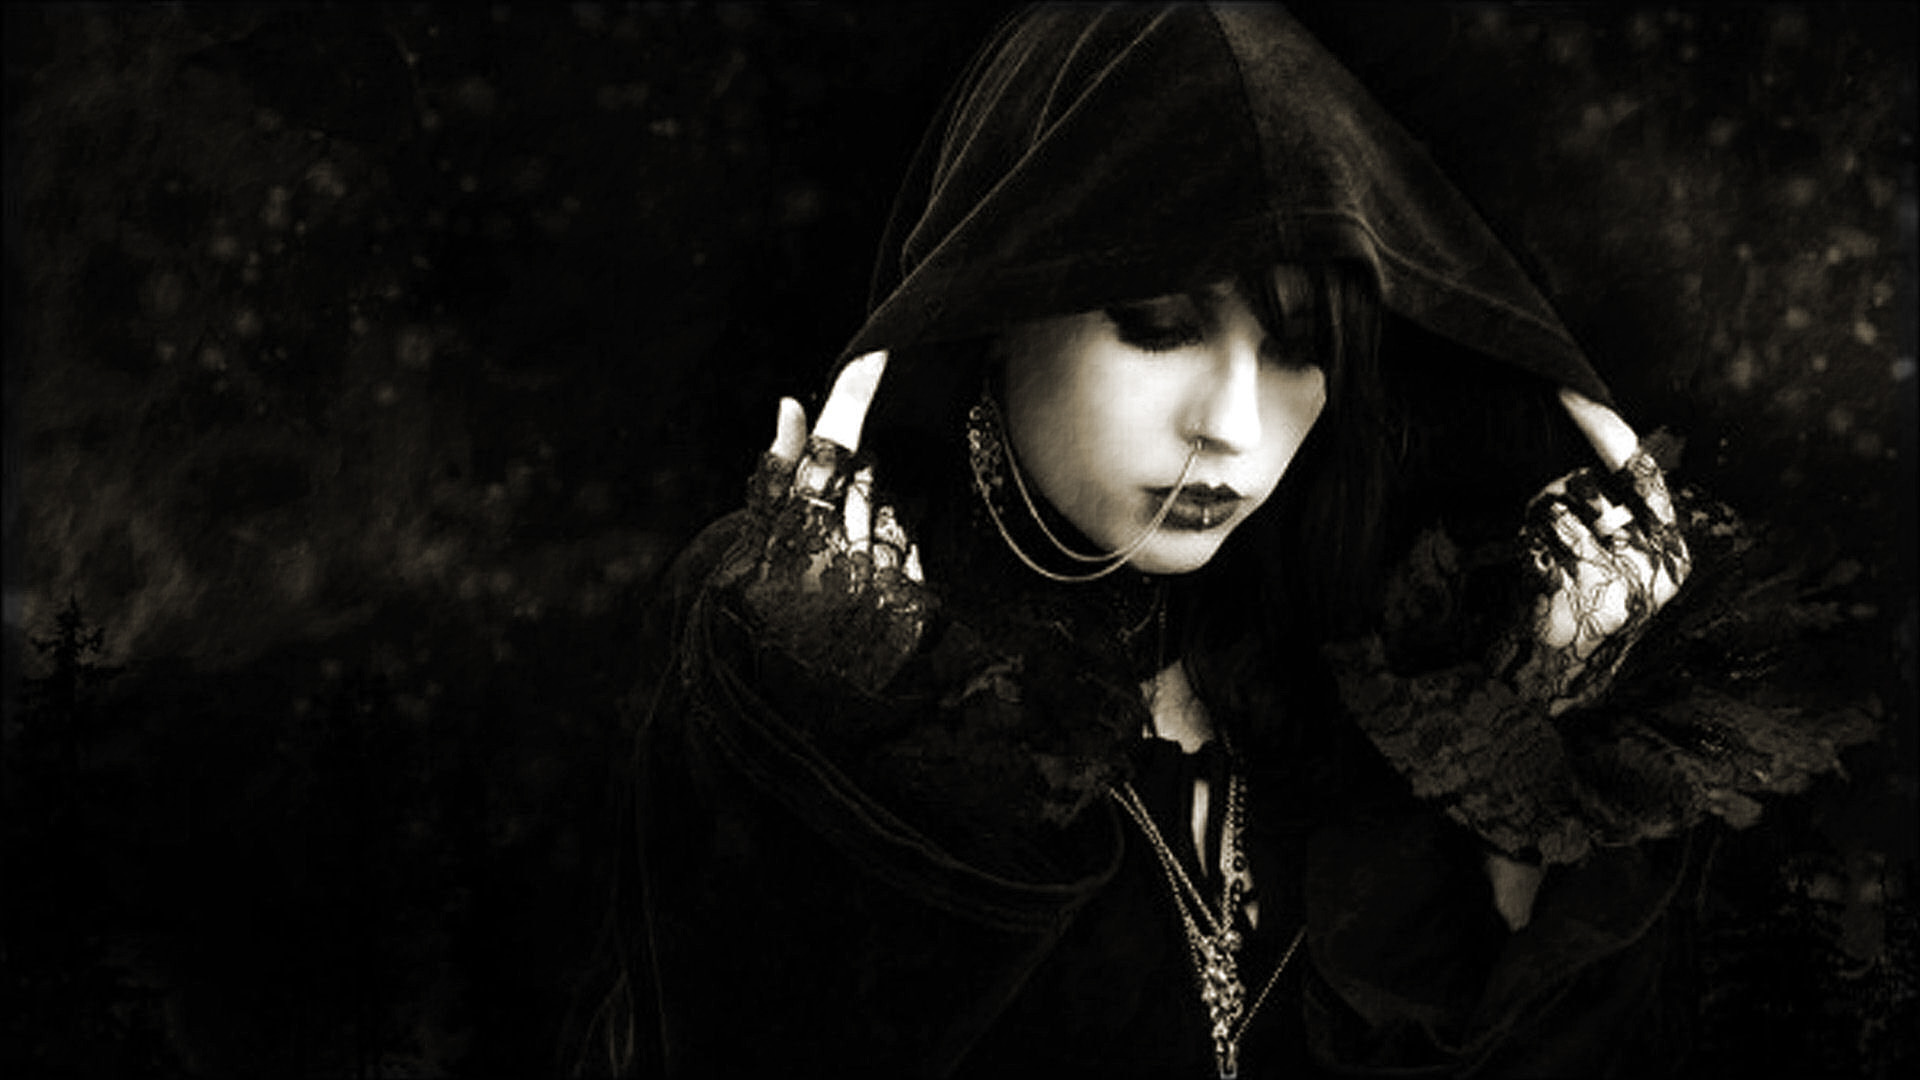 Dark goth